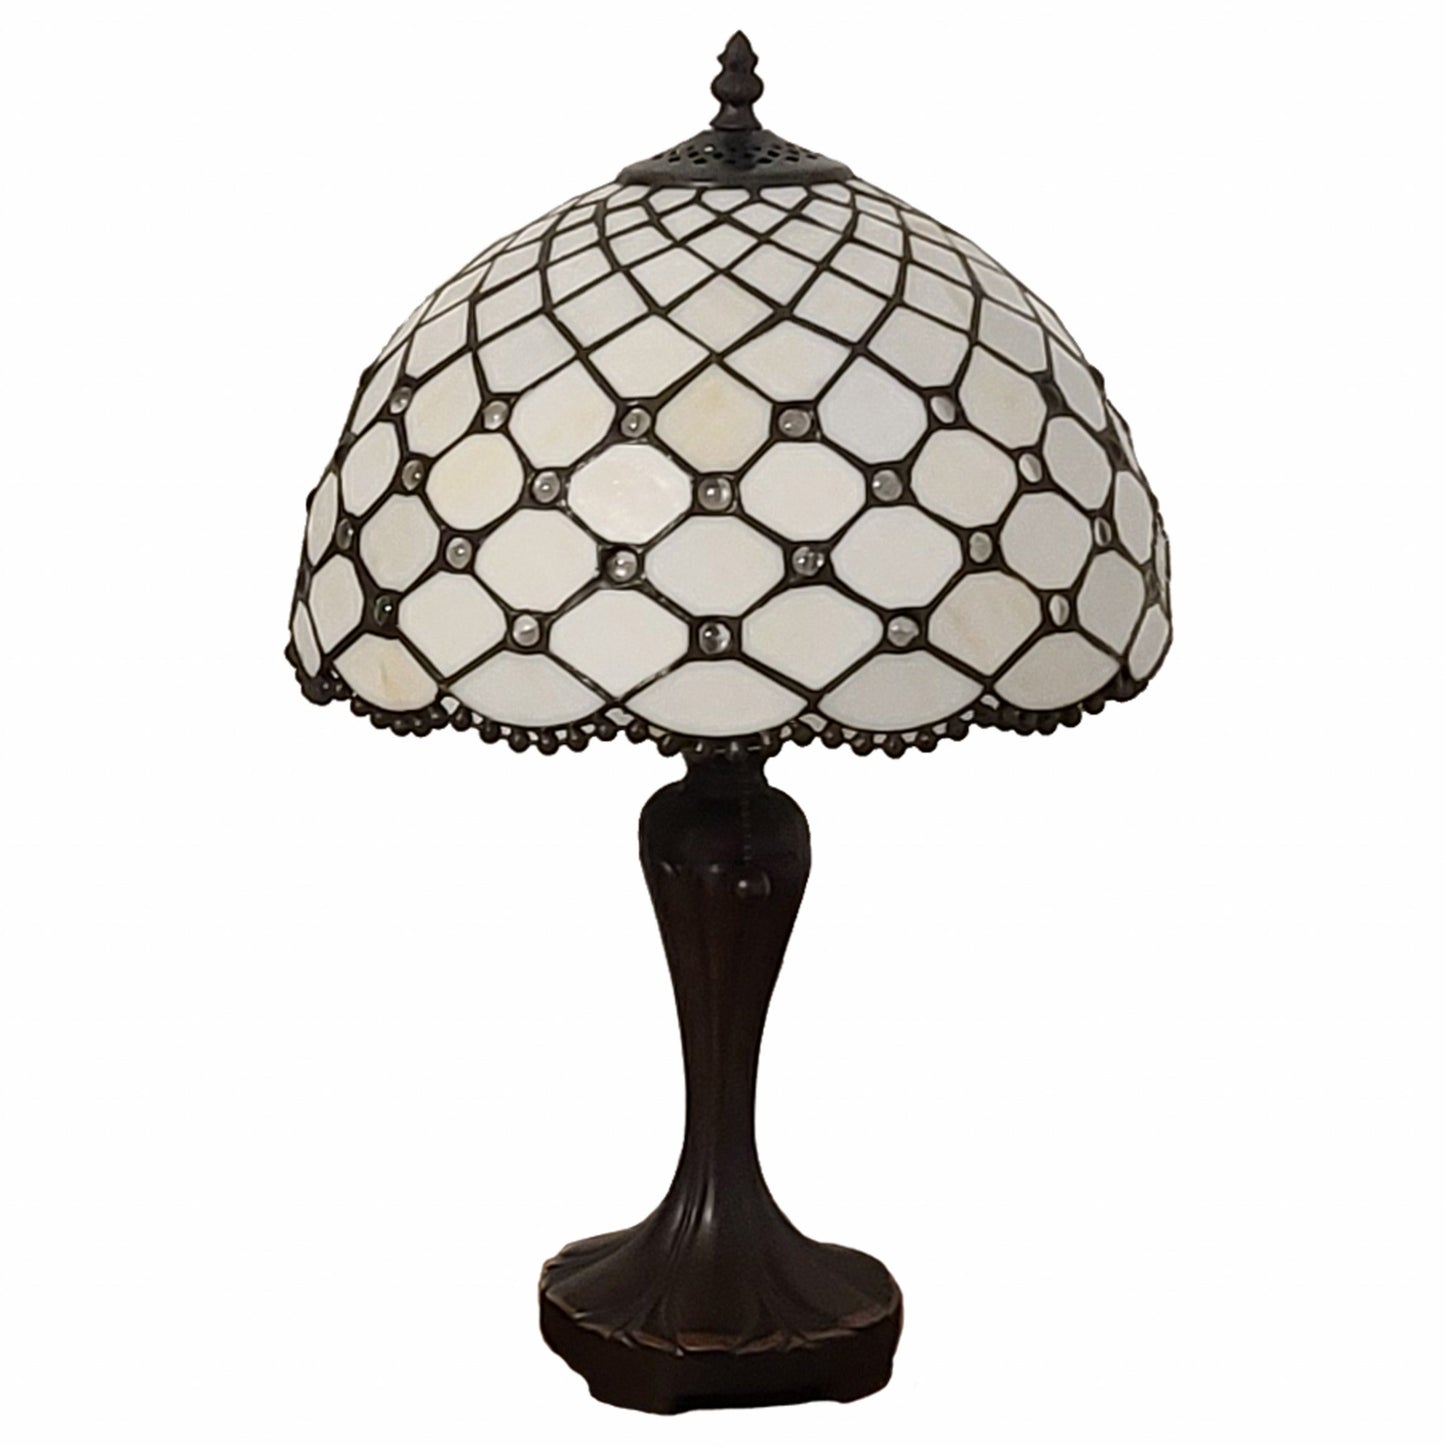 19" Tiffany Style Jeweled Glass Shade Table Lamp